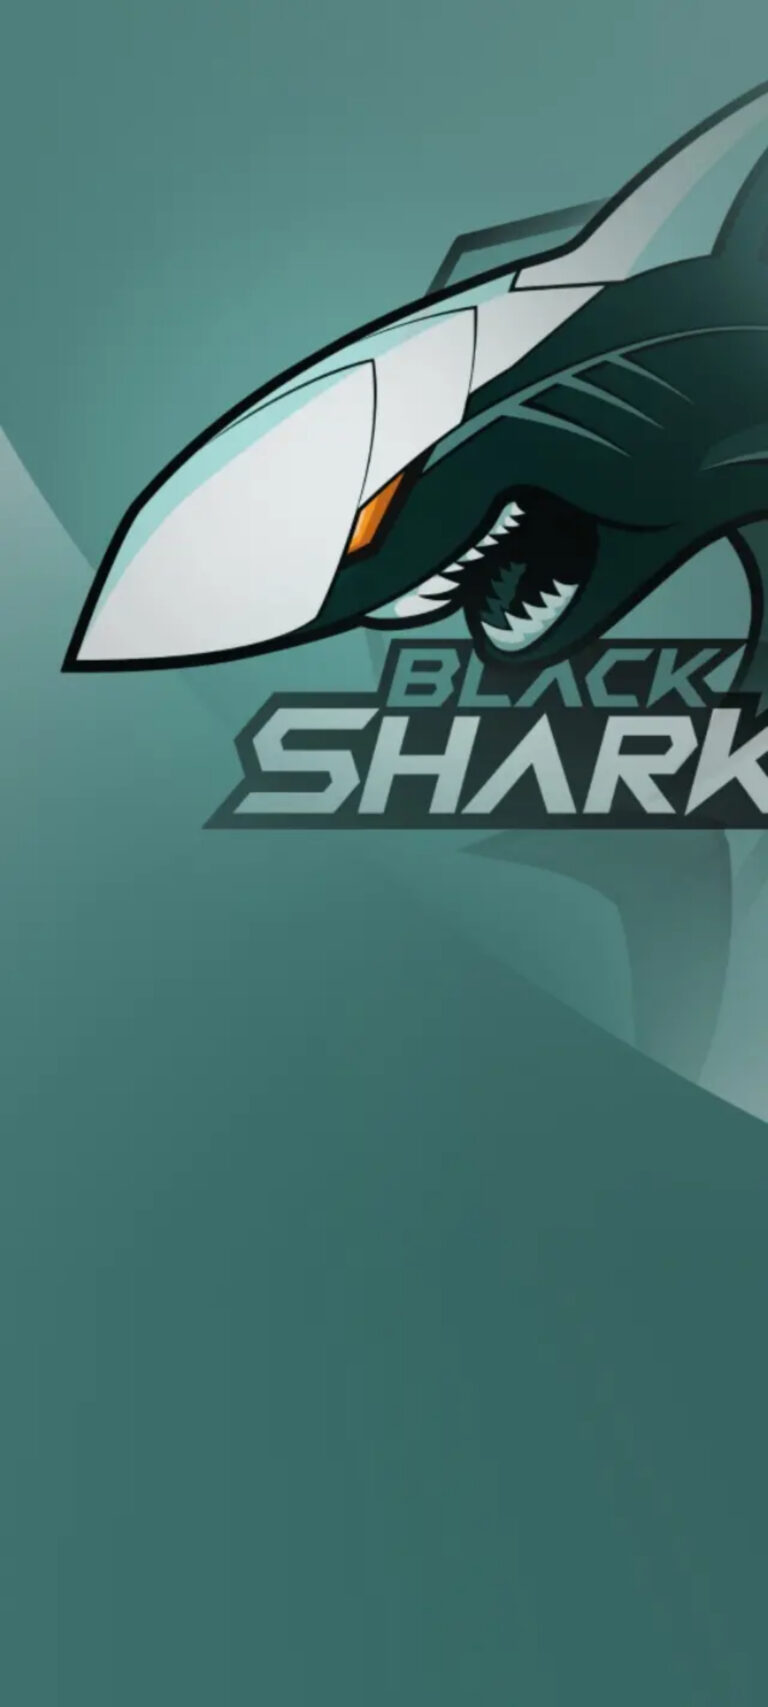  Wallpaper      Black  Shark  3  Specphone